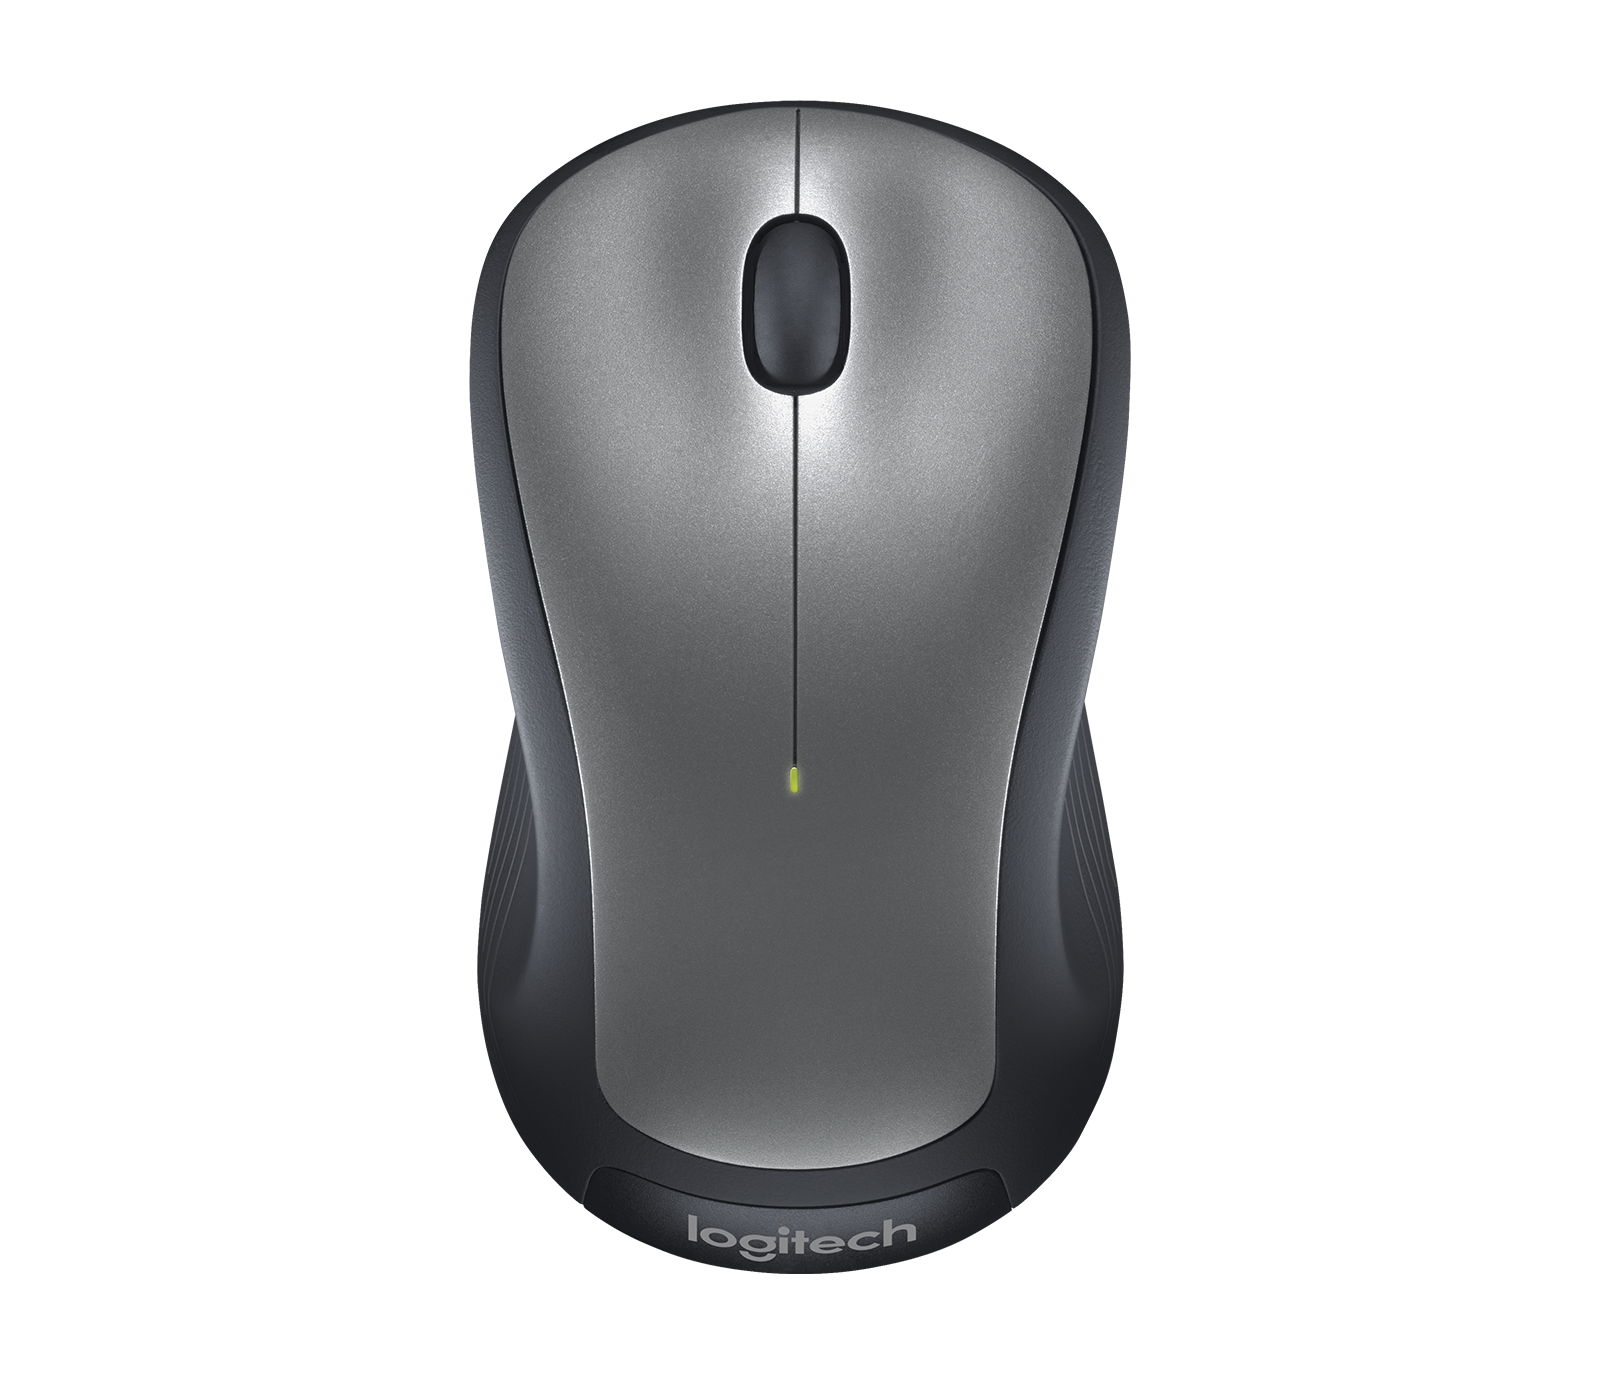 Forkert øre lag Logitech M310 Wireless Mouse with Ambidextrous Design